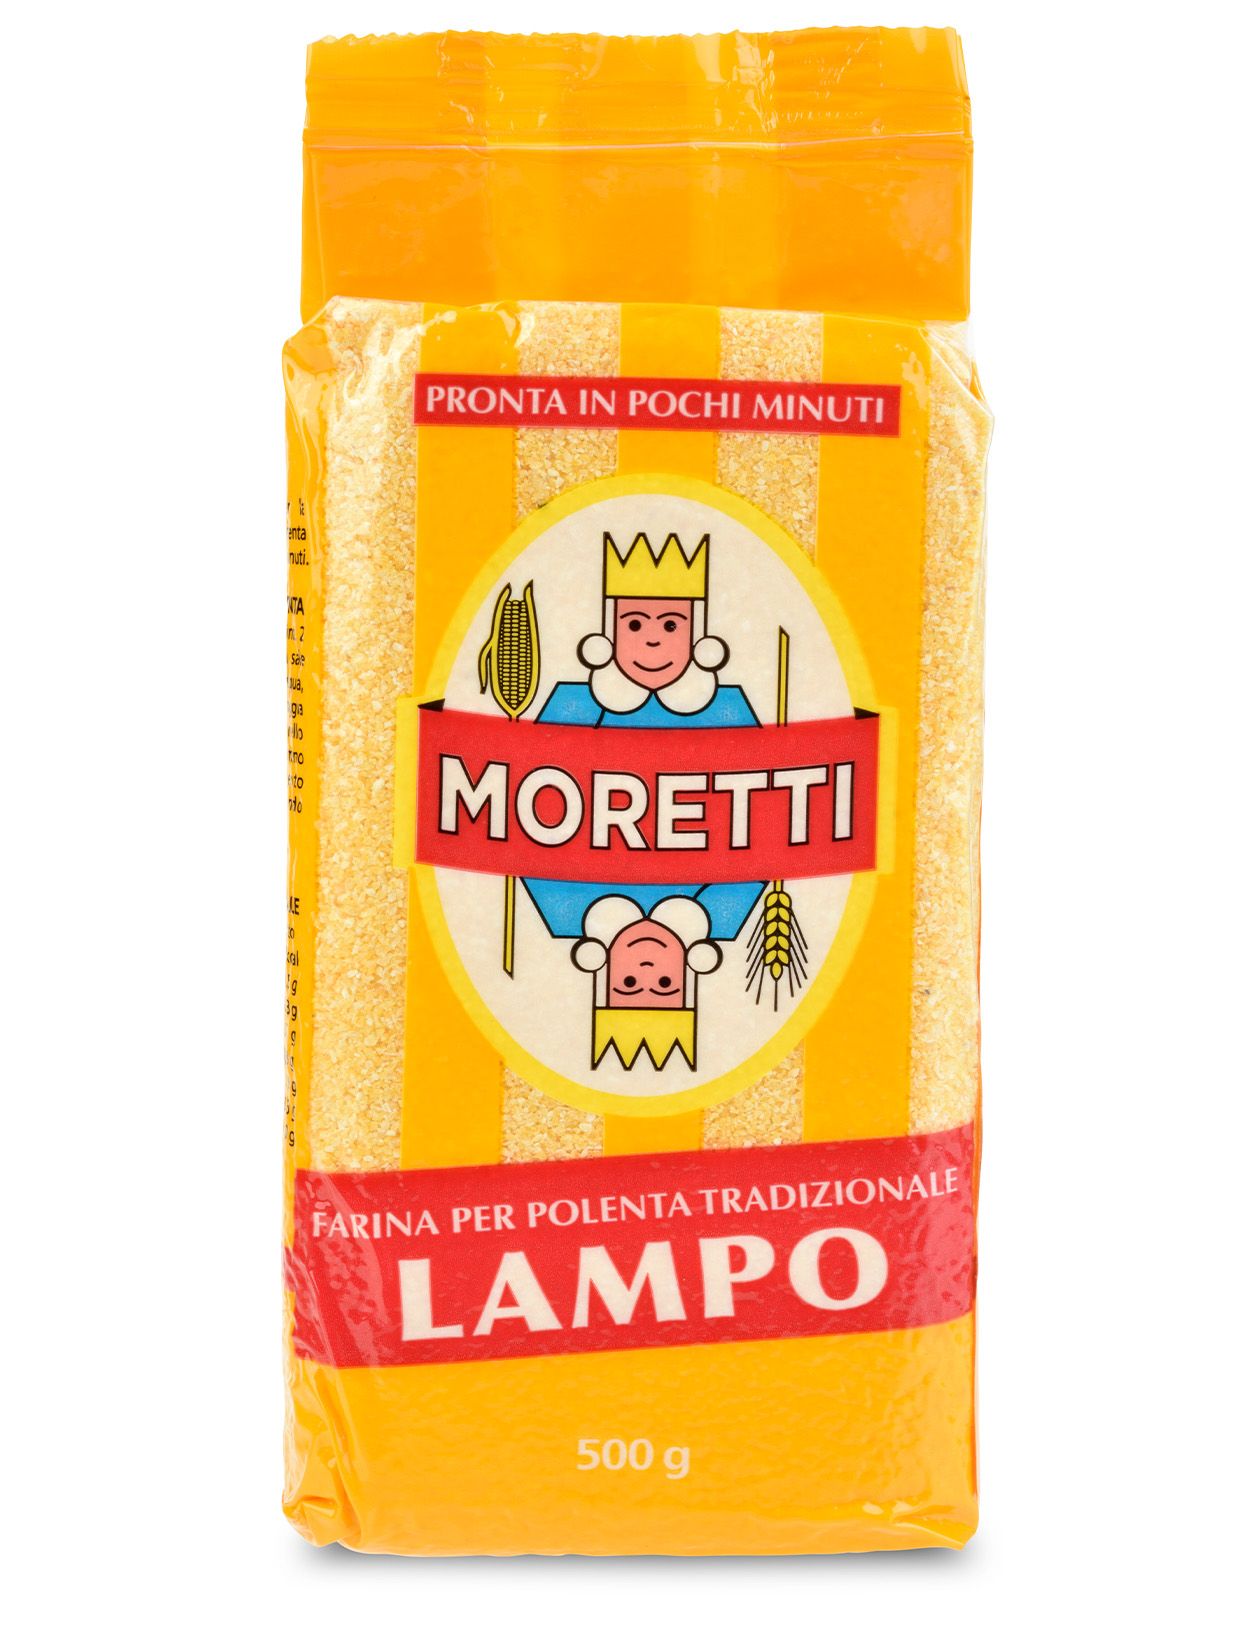 Lampo - Quick-Cooking Polenta